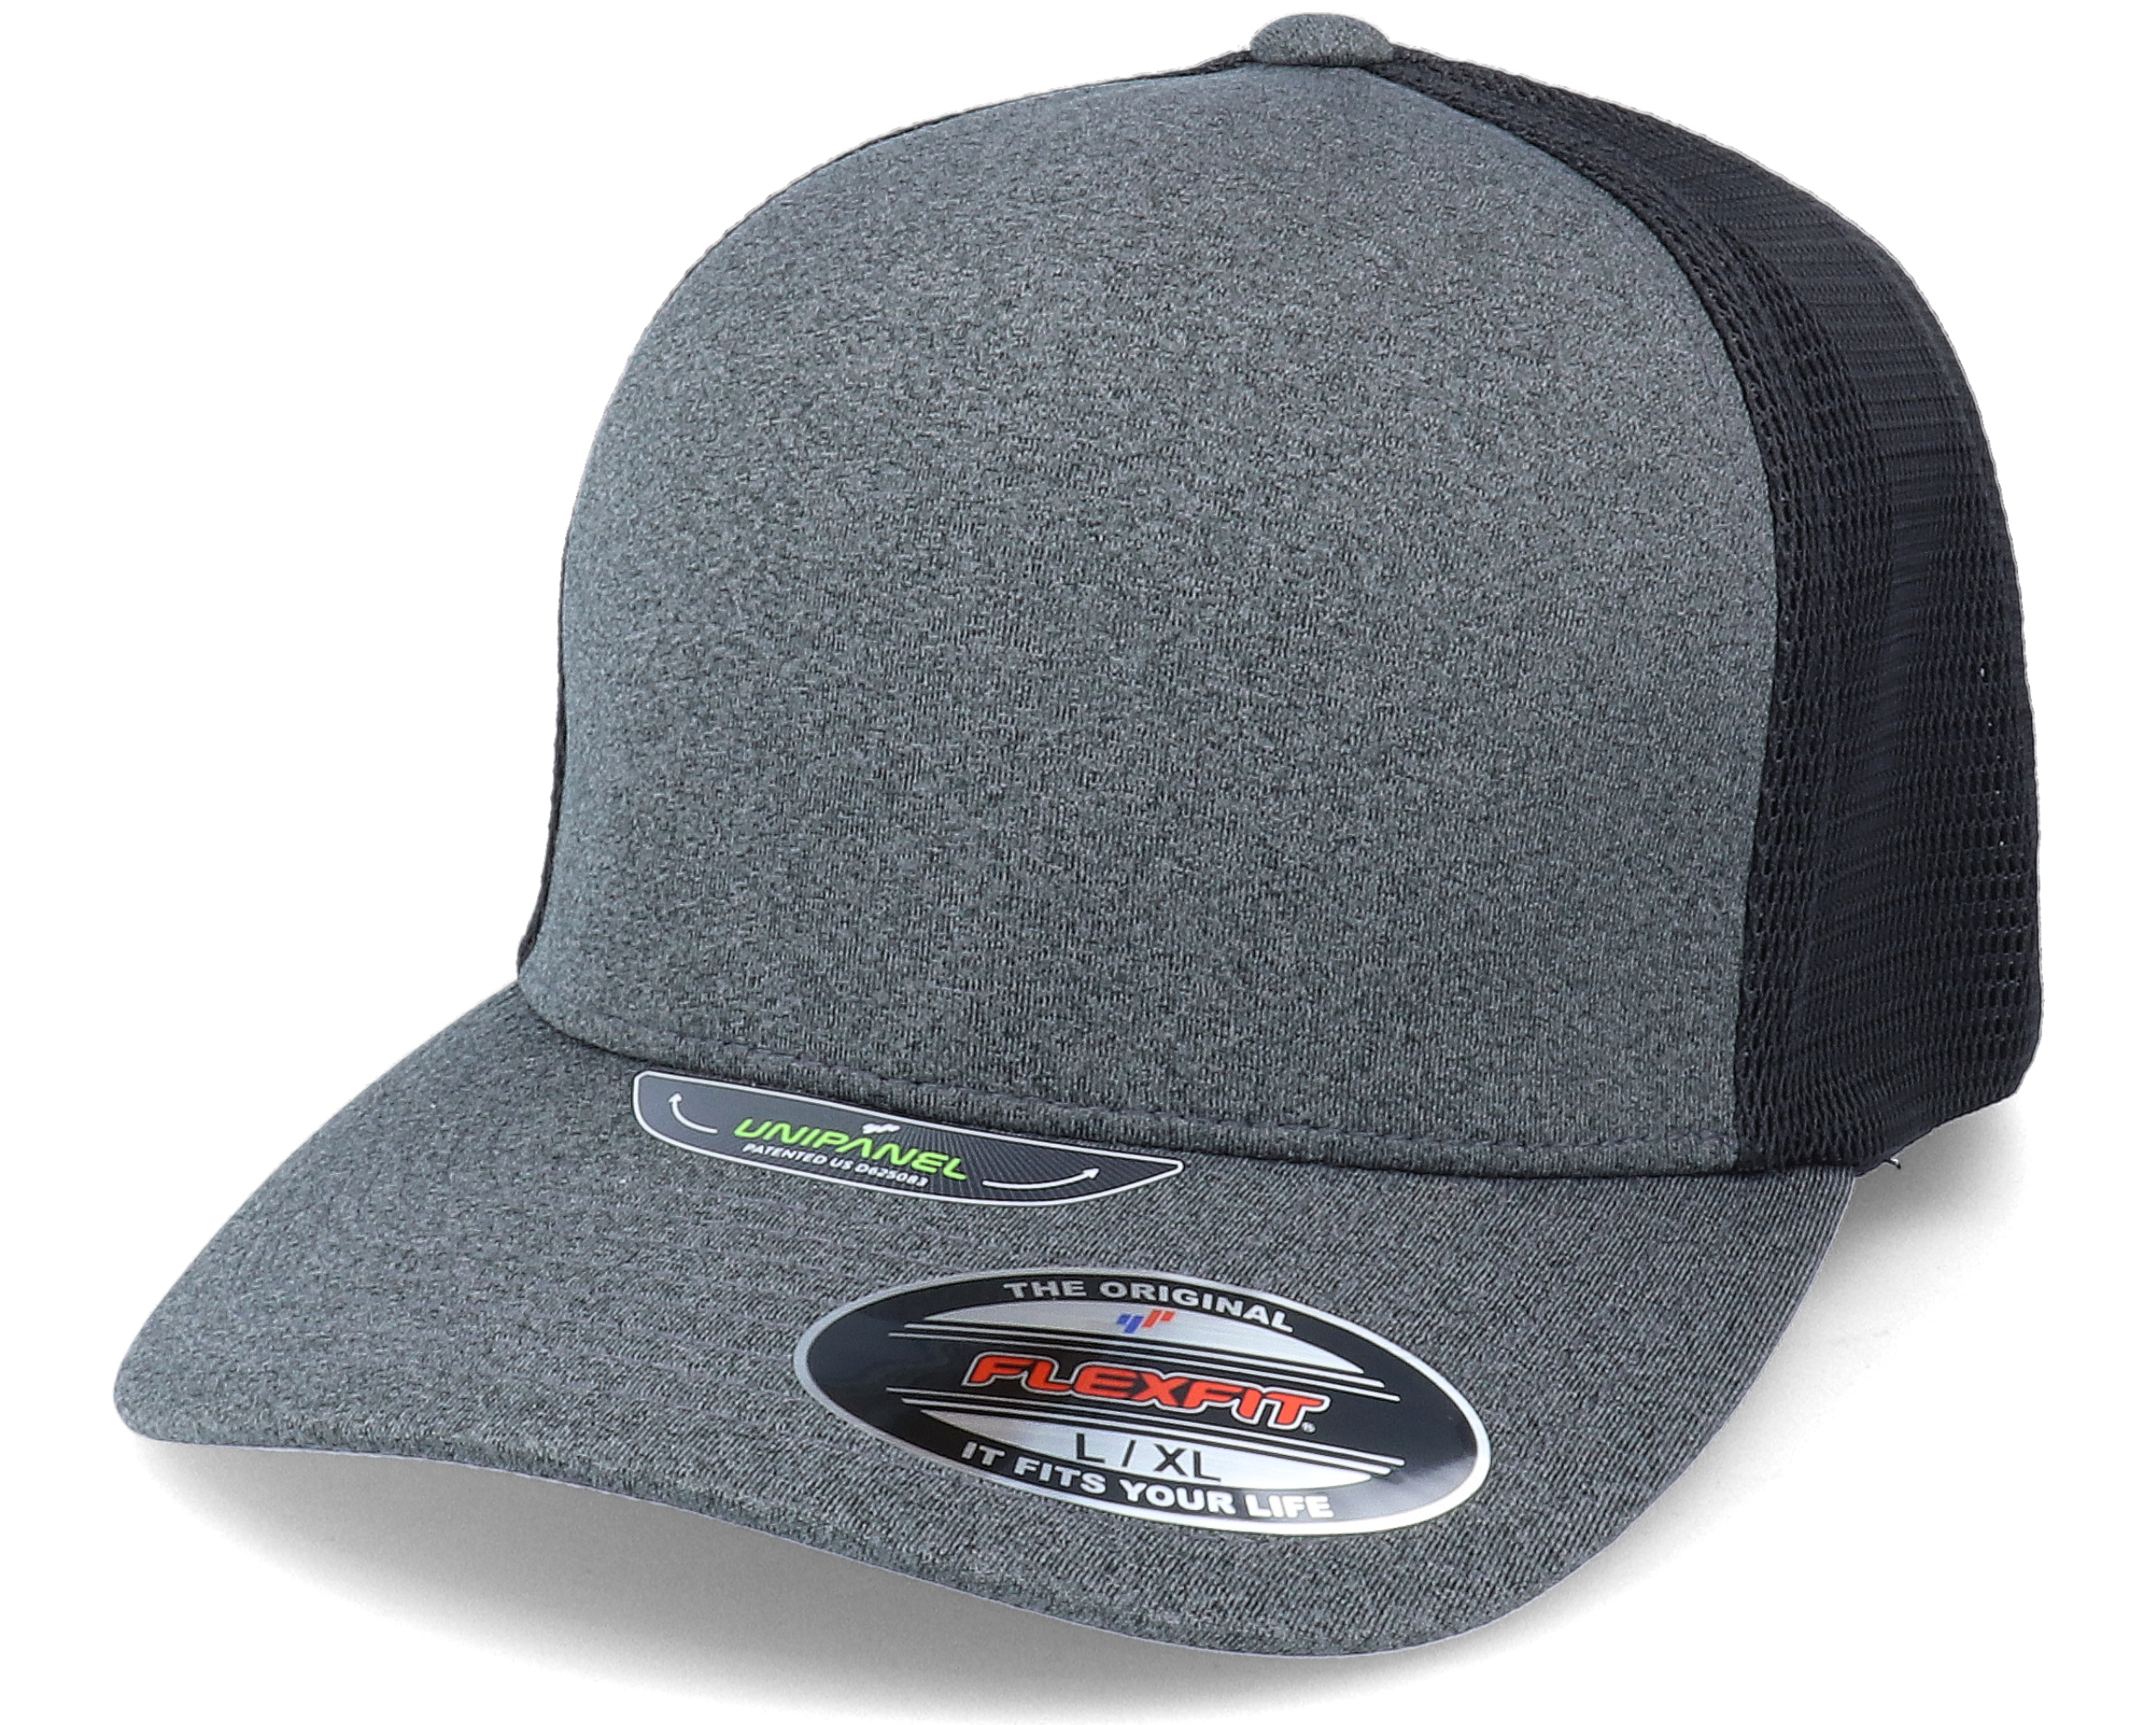 Unipanel Dark Grey/Black Trucker Flexfit - Flexfit cap